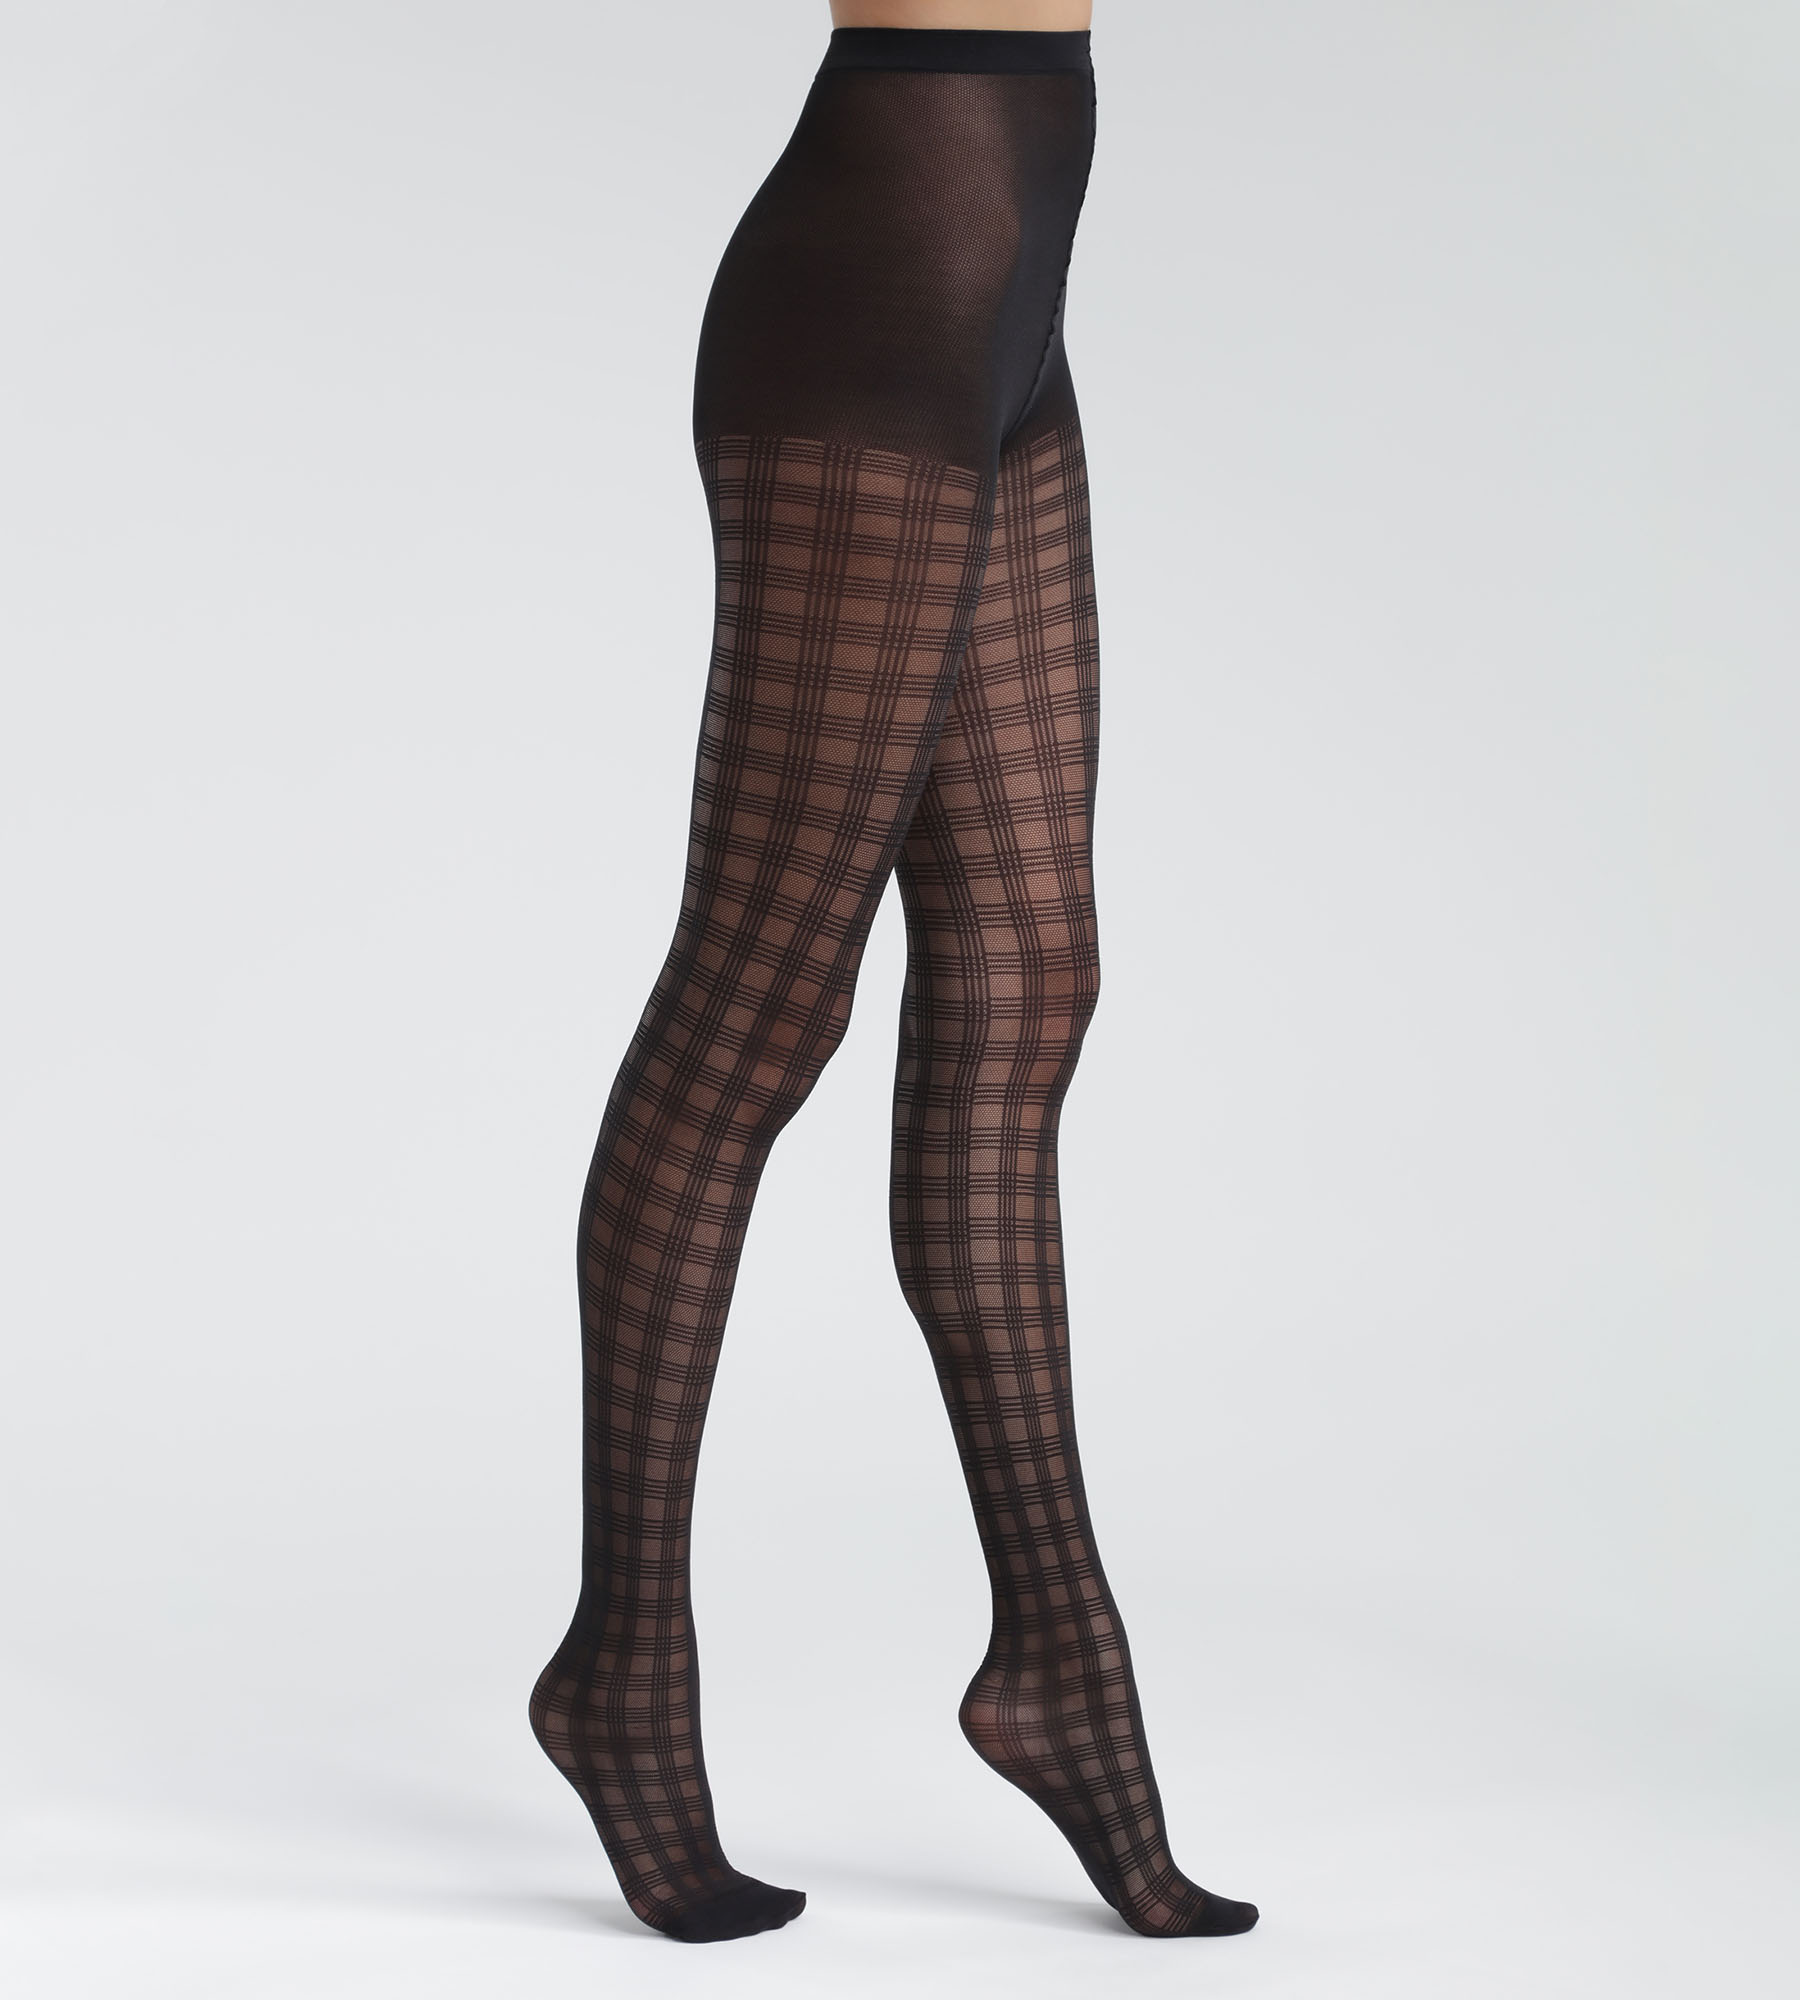 Women's Black Dim Style sheer tights with a Diagonal Stripe pattern